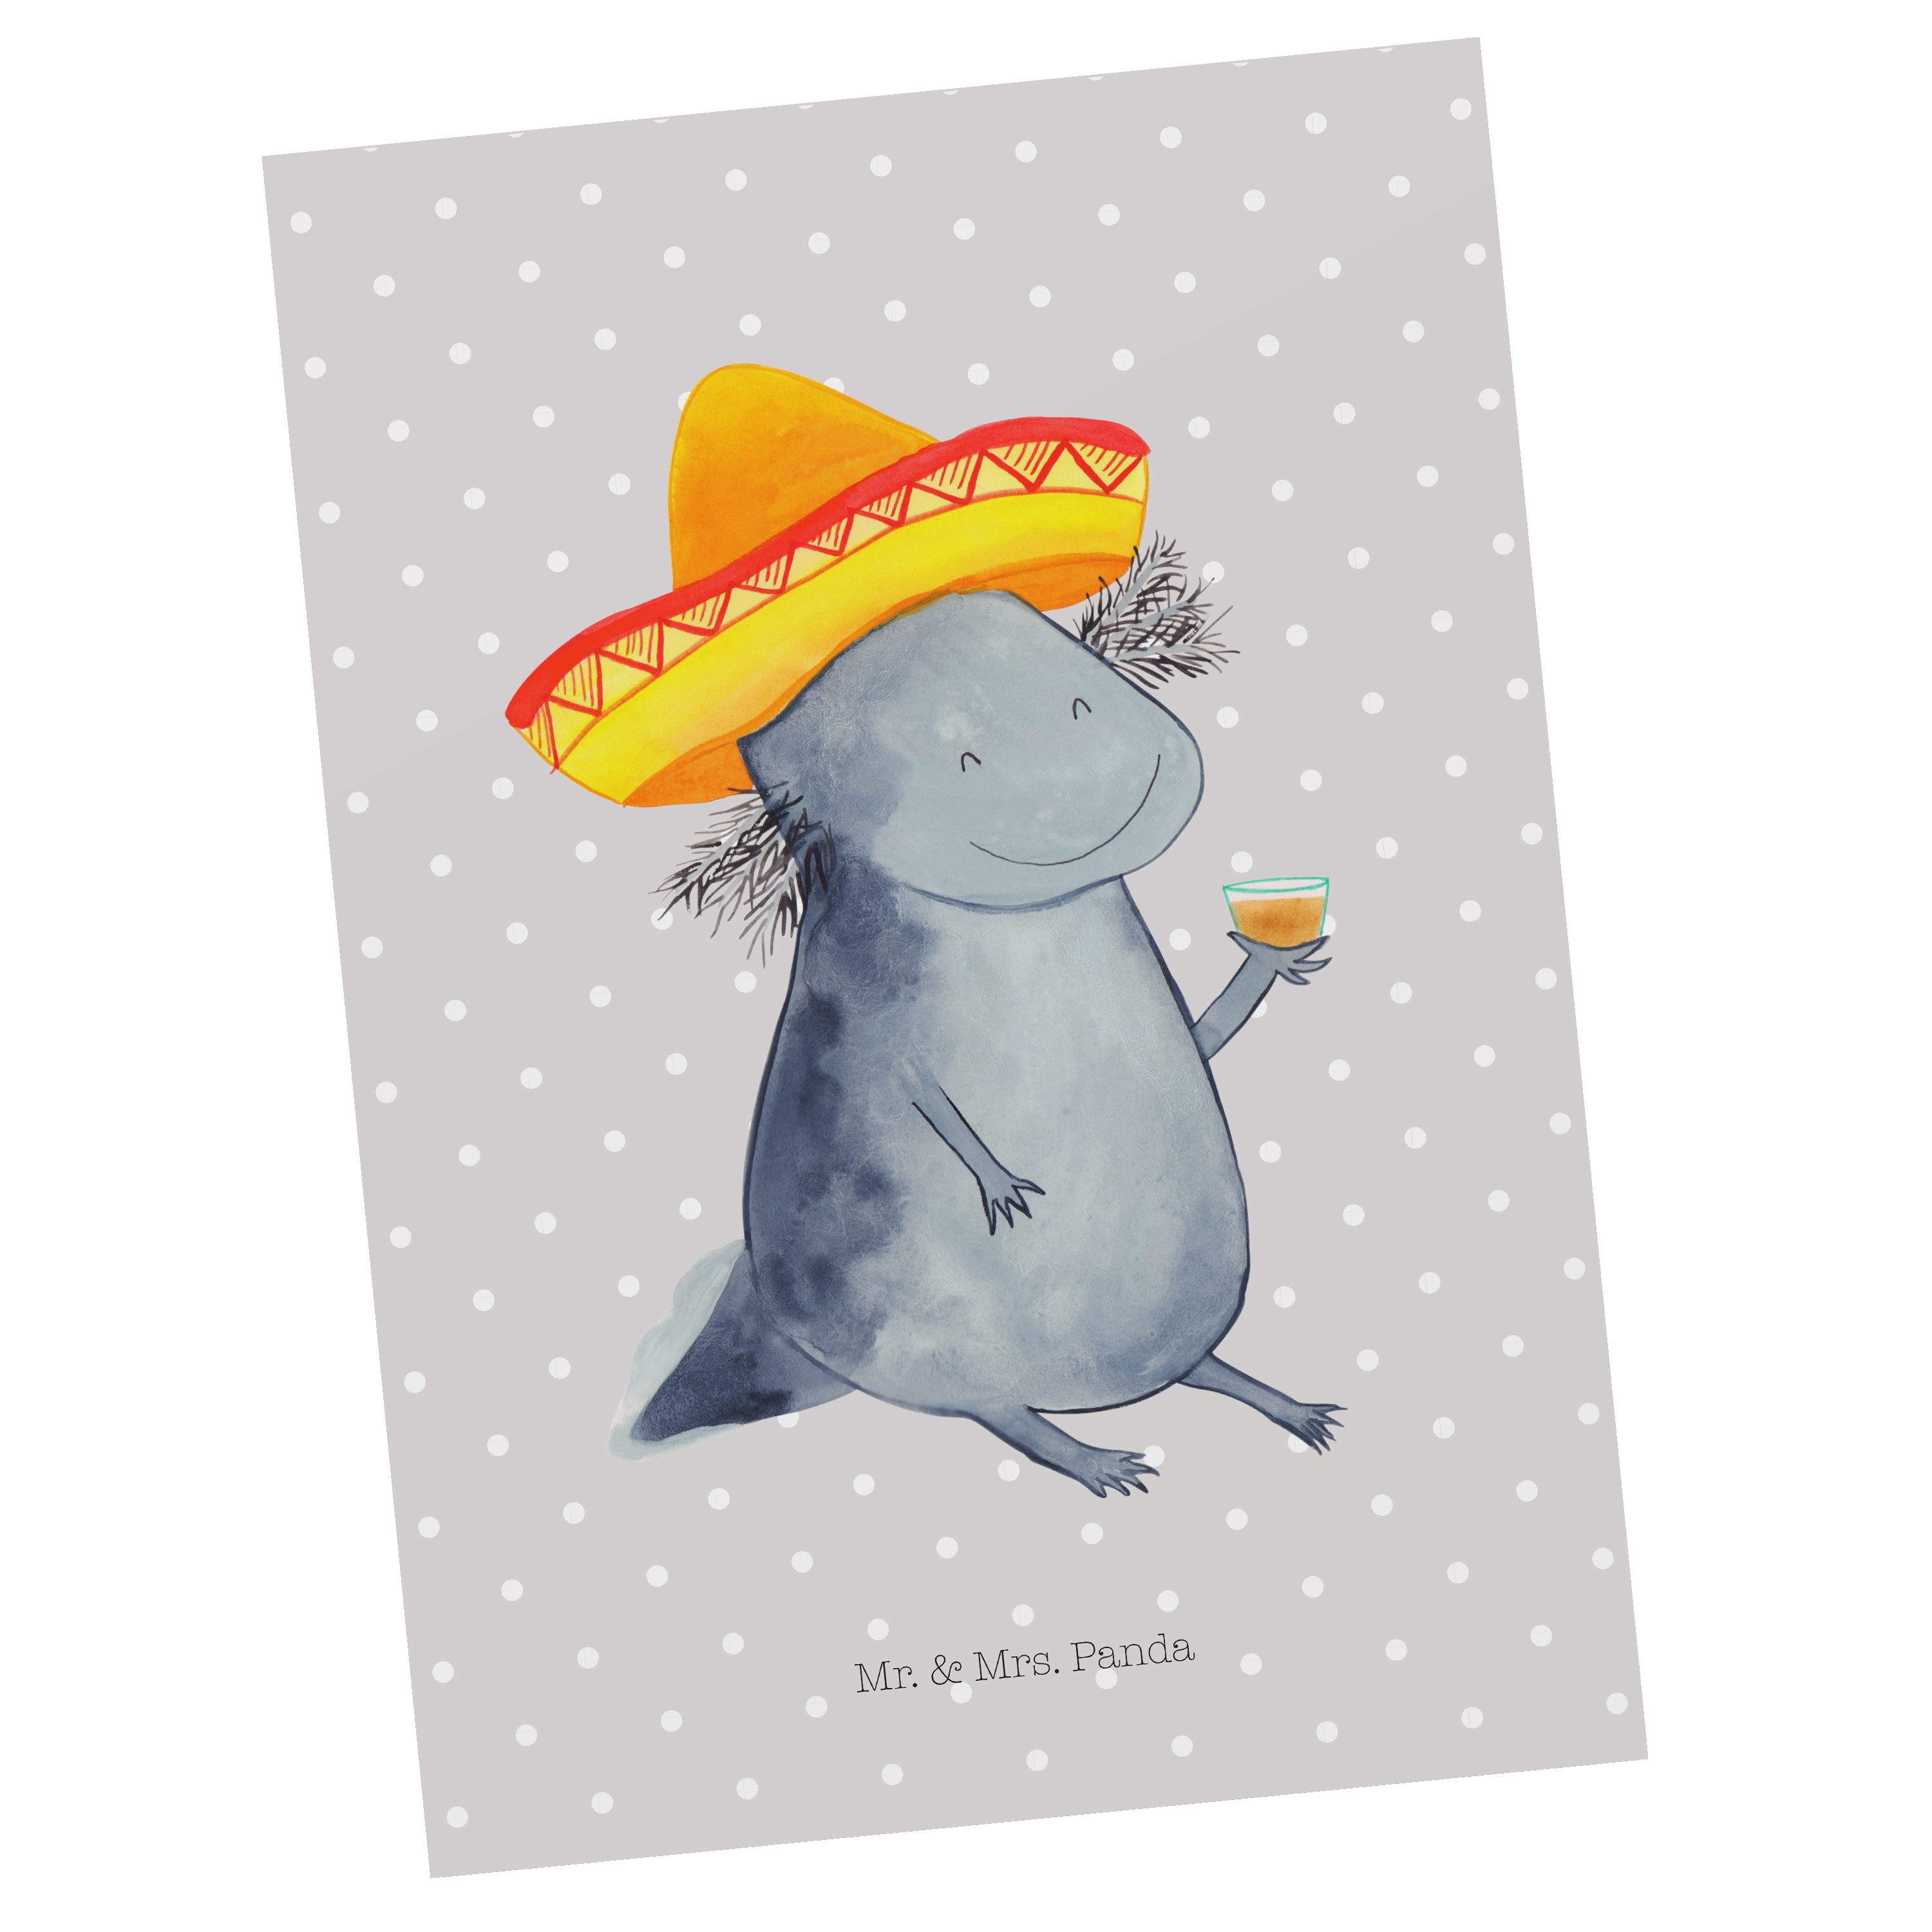 Mr. & Mrs. Grau - Pastell Tequila - Feu Panda Axolotl Grußkarte, Geschenk, Motivation, Postkarte